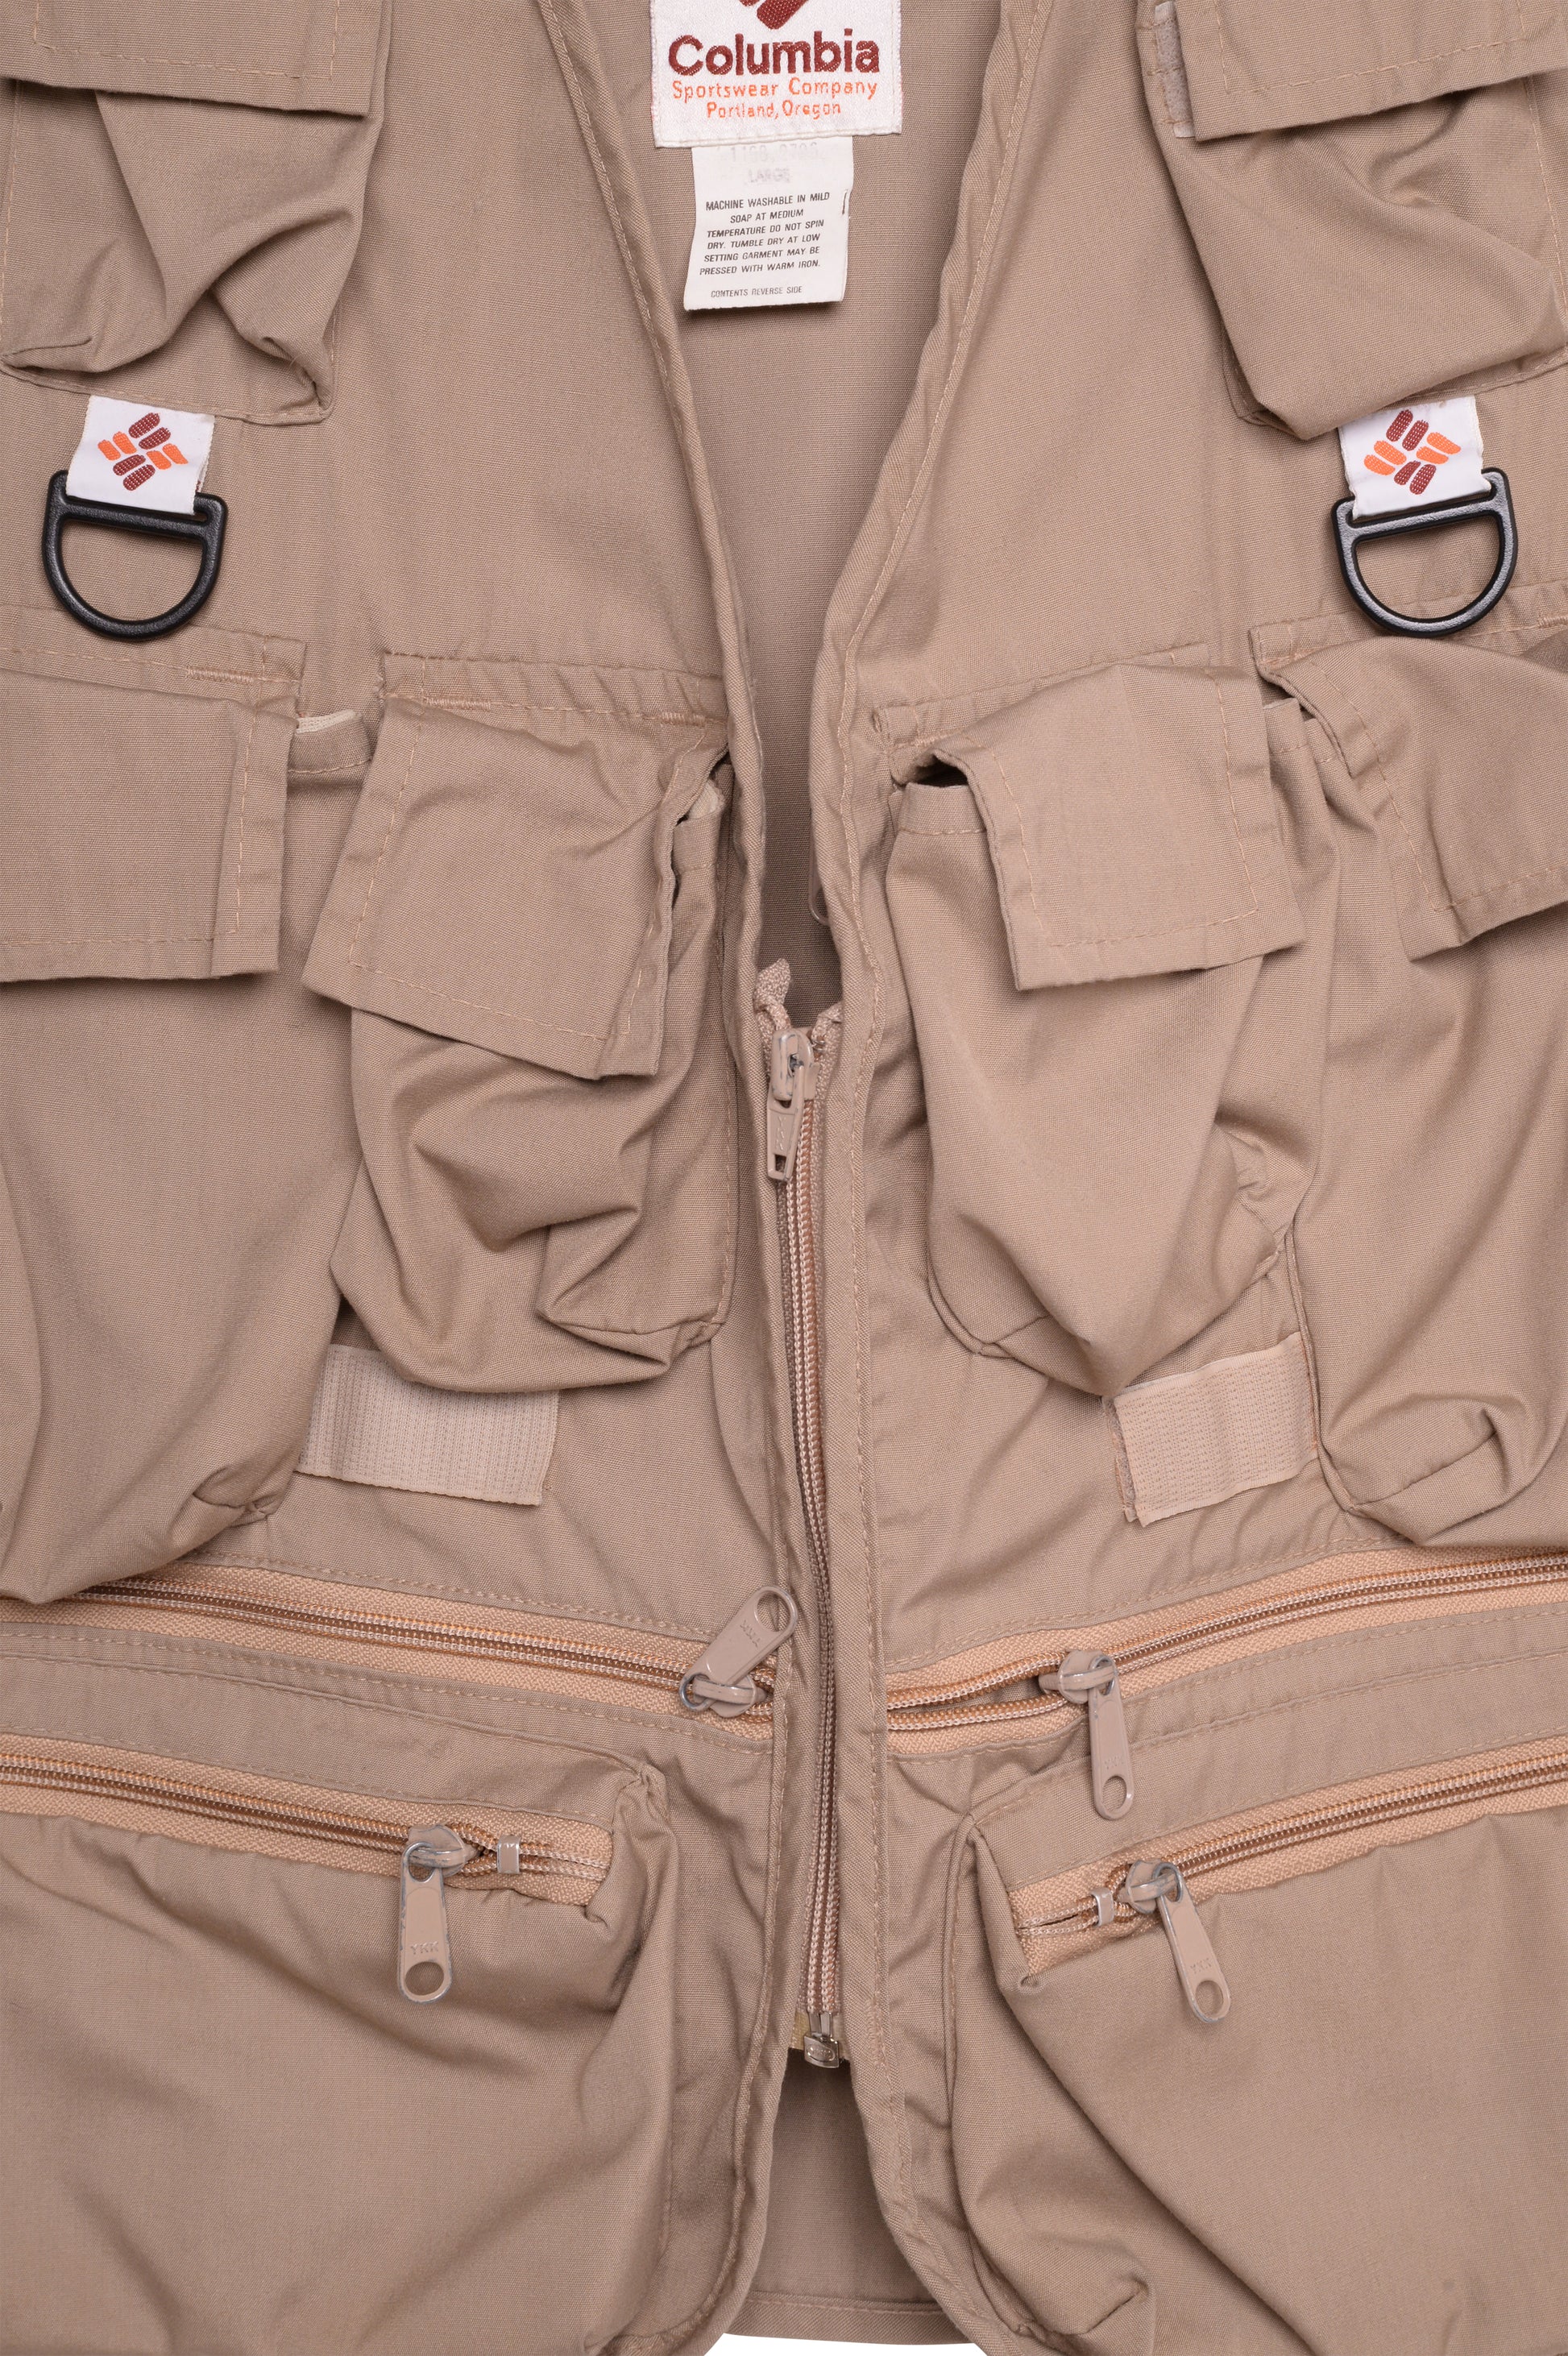 Columbia PFG Utility Cargo Fishing Vest (S) – Like New Vintage